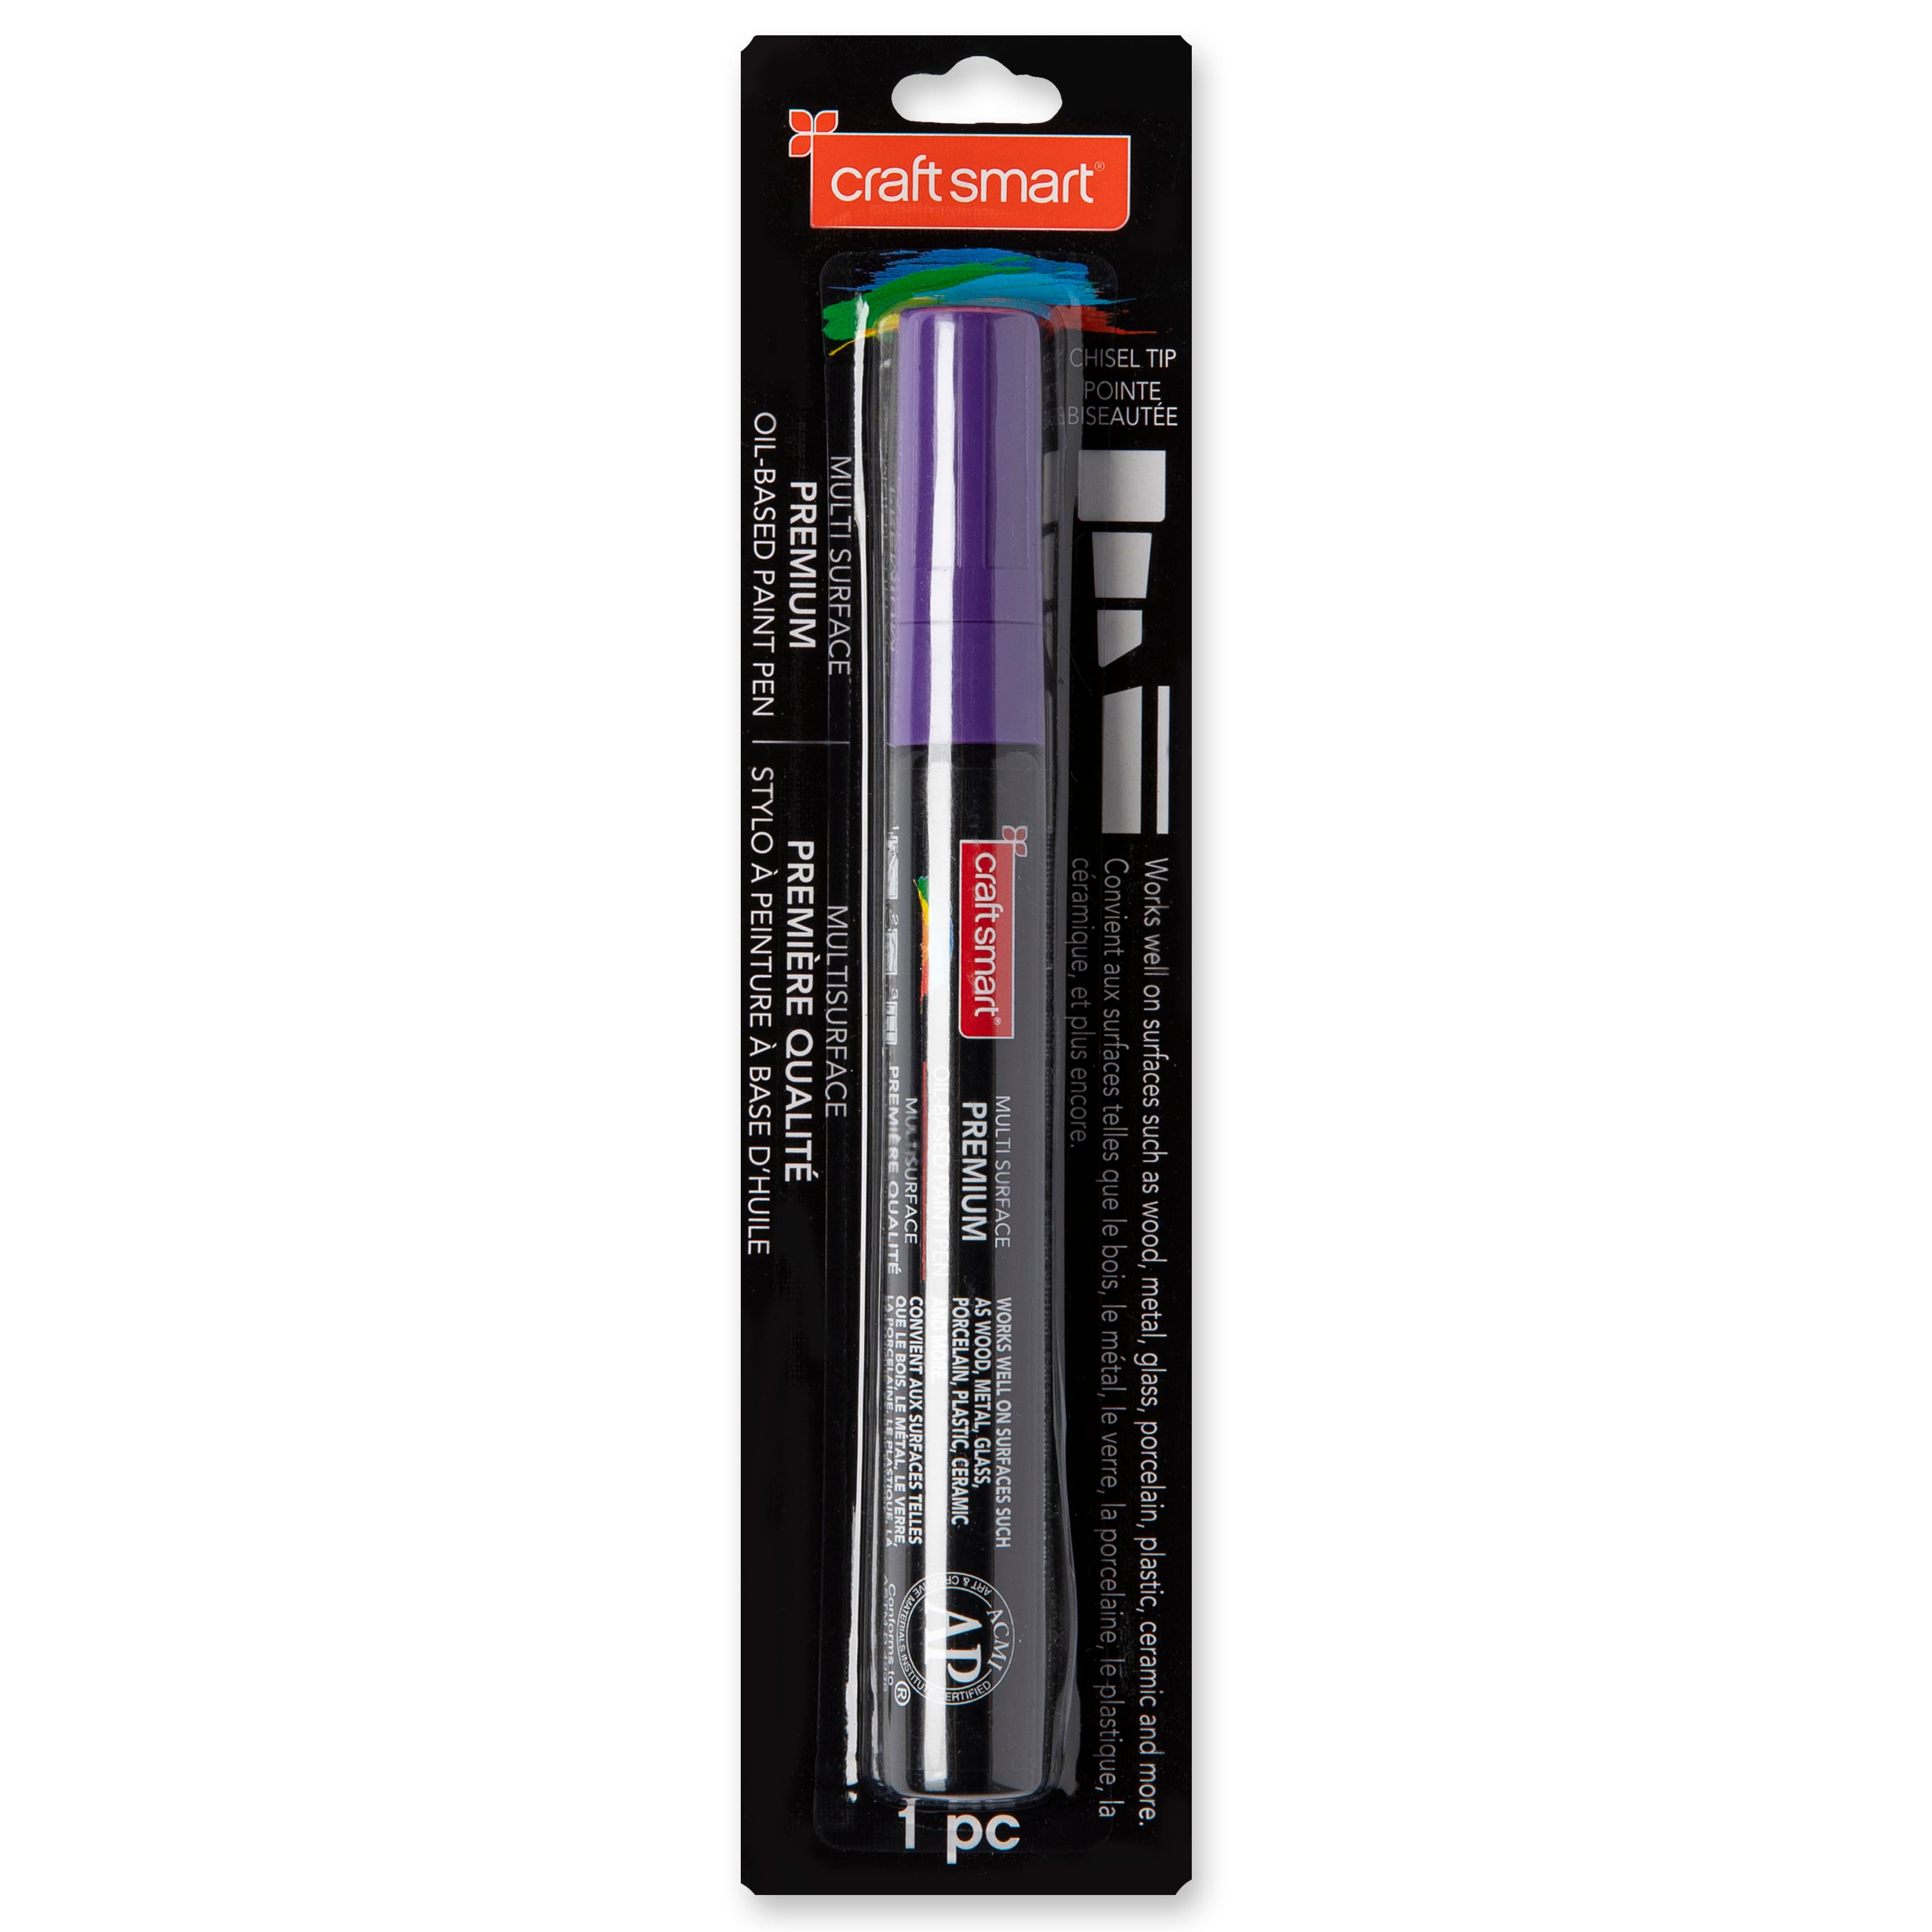 Chisel Tip Multi-Surface Premium Paint Pen by Craft Smart&#xAE;